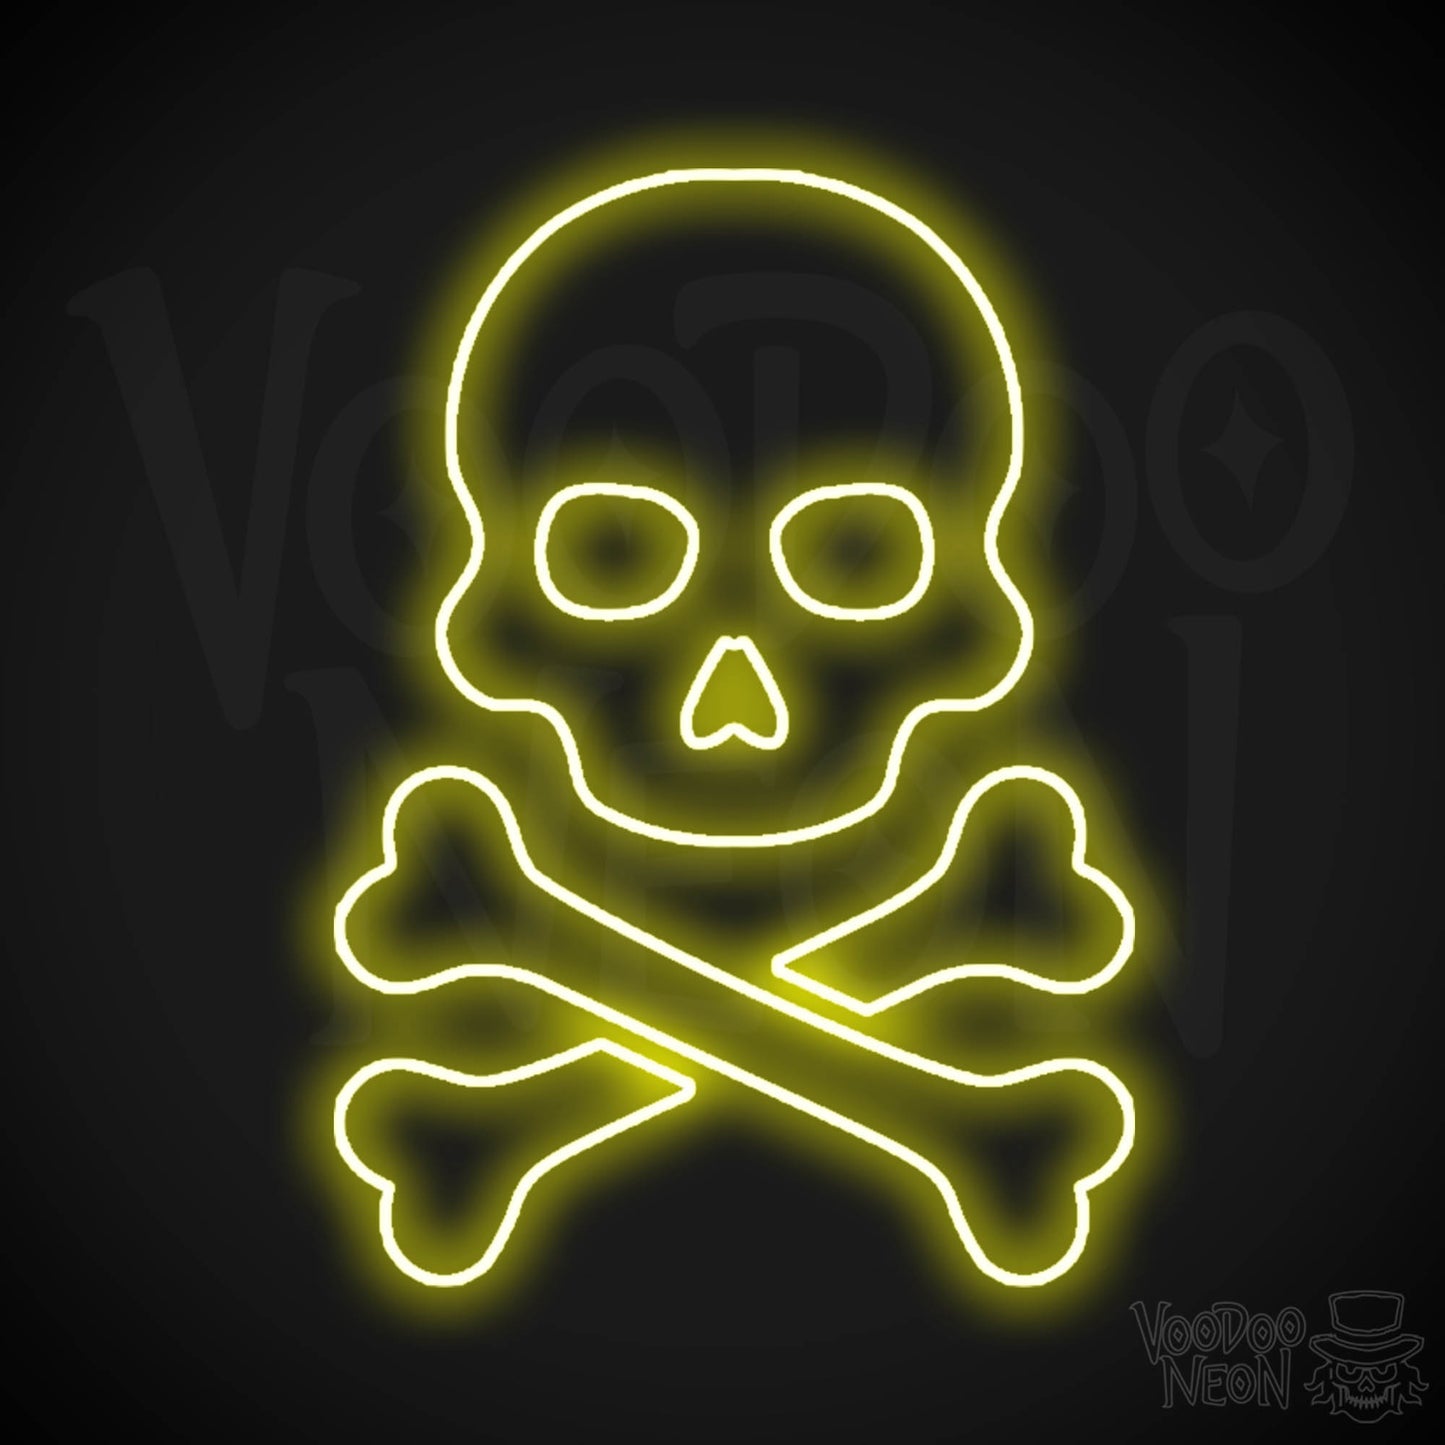 Pirate Skull & Crossbones Neon Sign - Neon Pirate Skull & Crossbones Sign - LED Lights - Color Yellow